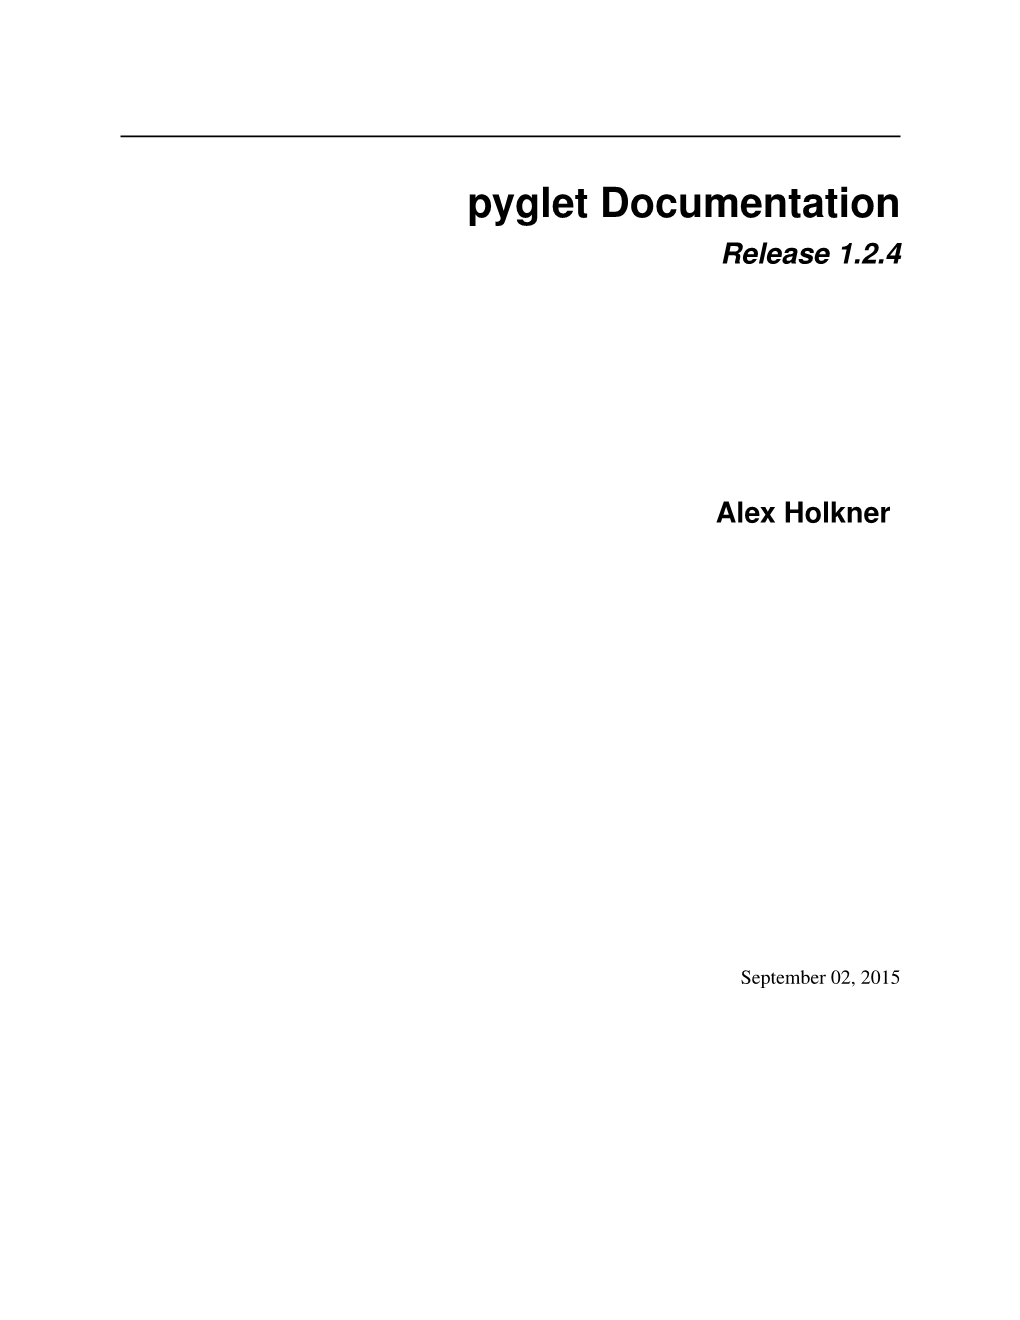 Pyglet Documentation Release 1.2.4